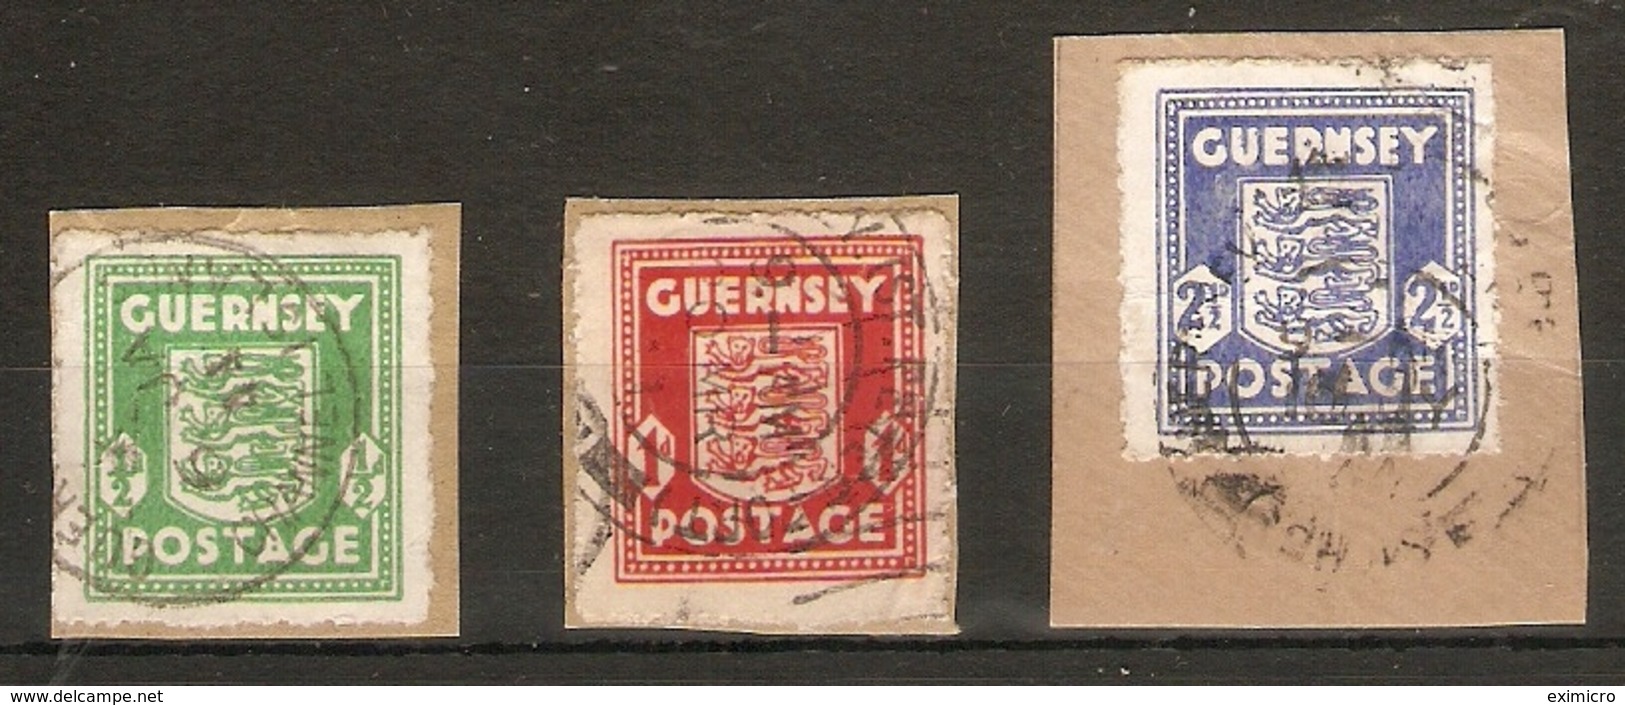 GUERNSEY 1941 - 1944 SET SG 1/3 FINE USED Cat £20.50 - Guernsey